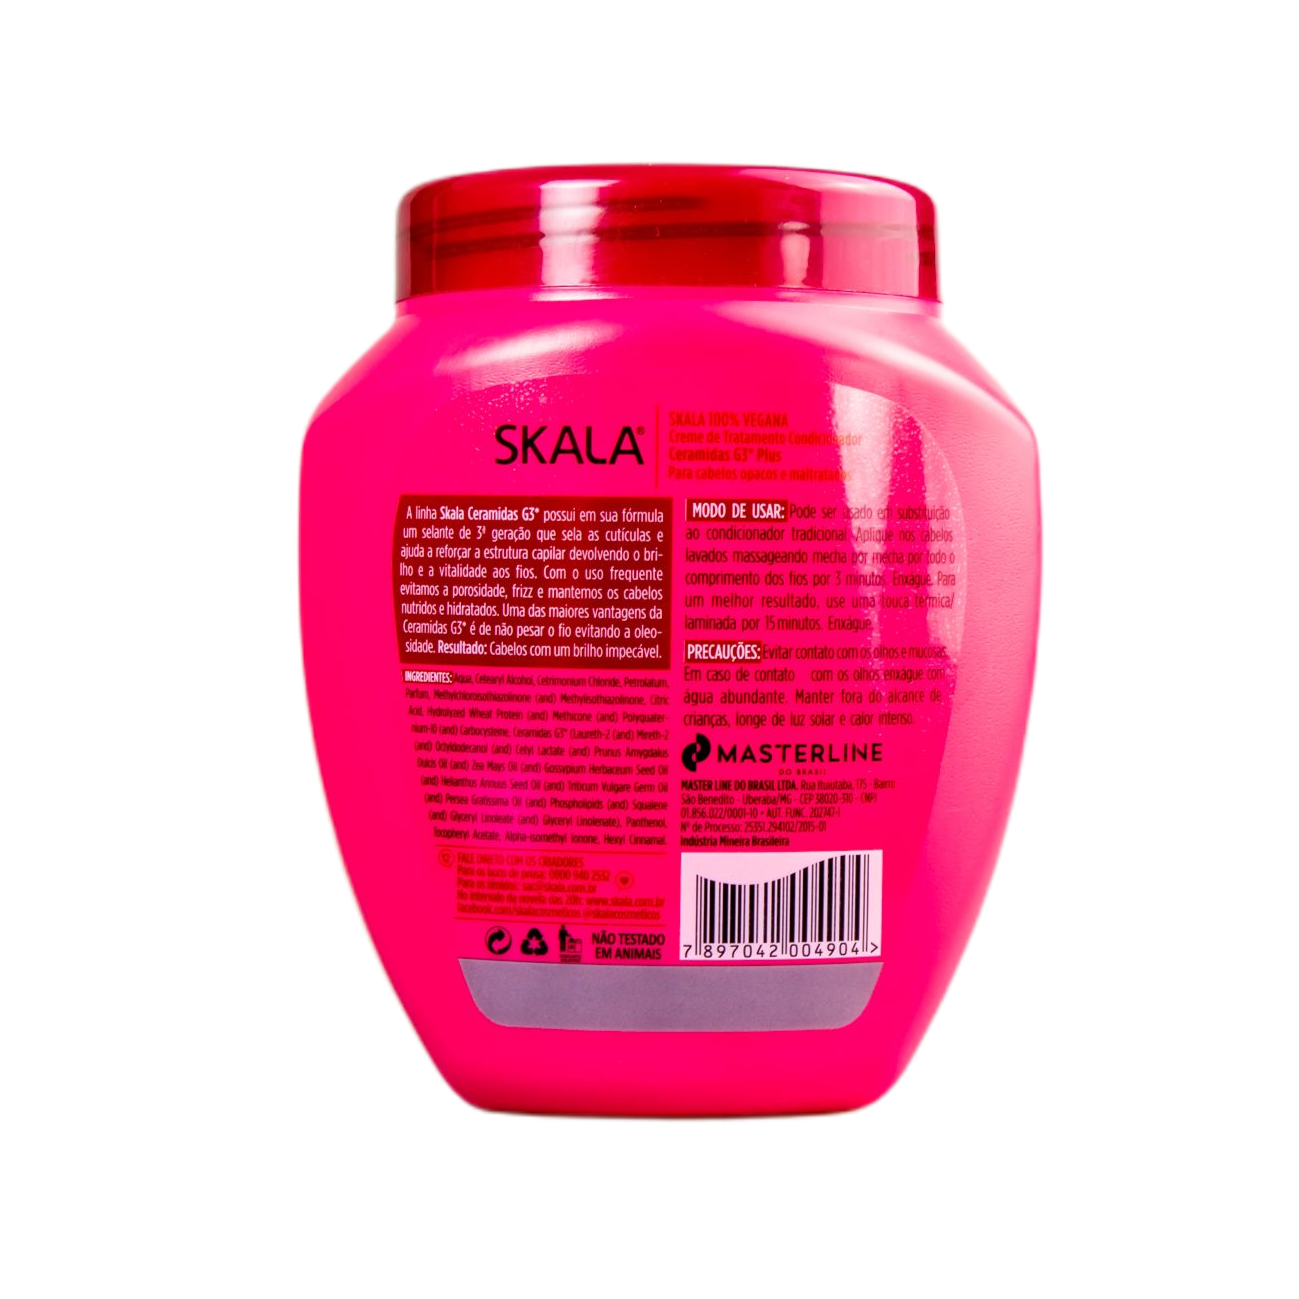 Skala Treatment Cream Creme De Tratamento Ceramidas / Cream Treatment Ceramides Hair Treatment Cream - Skala